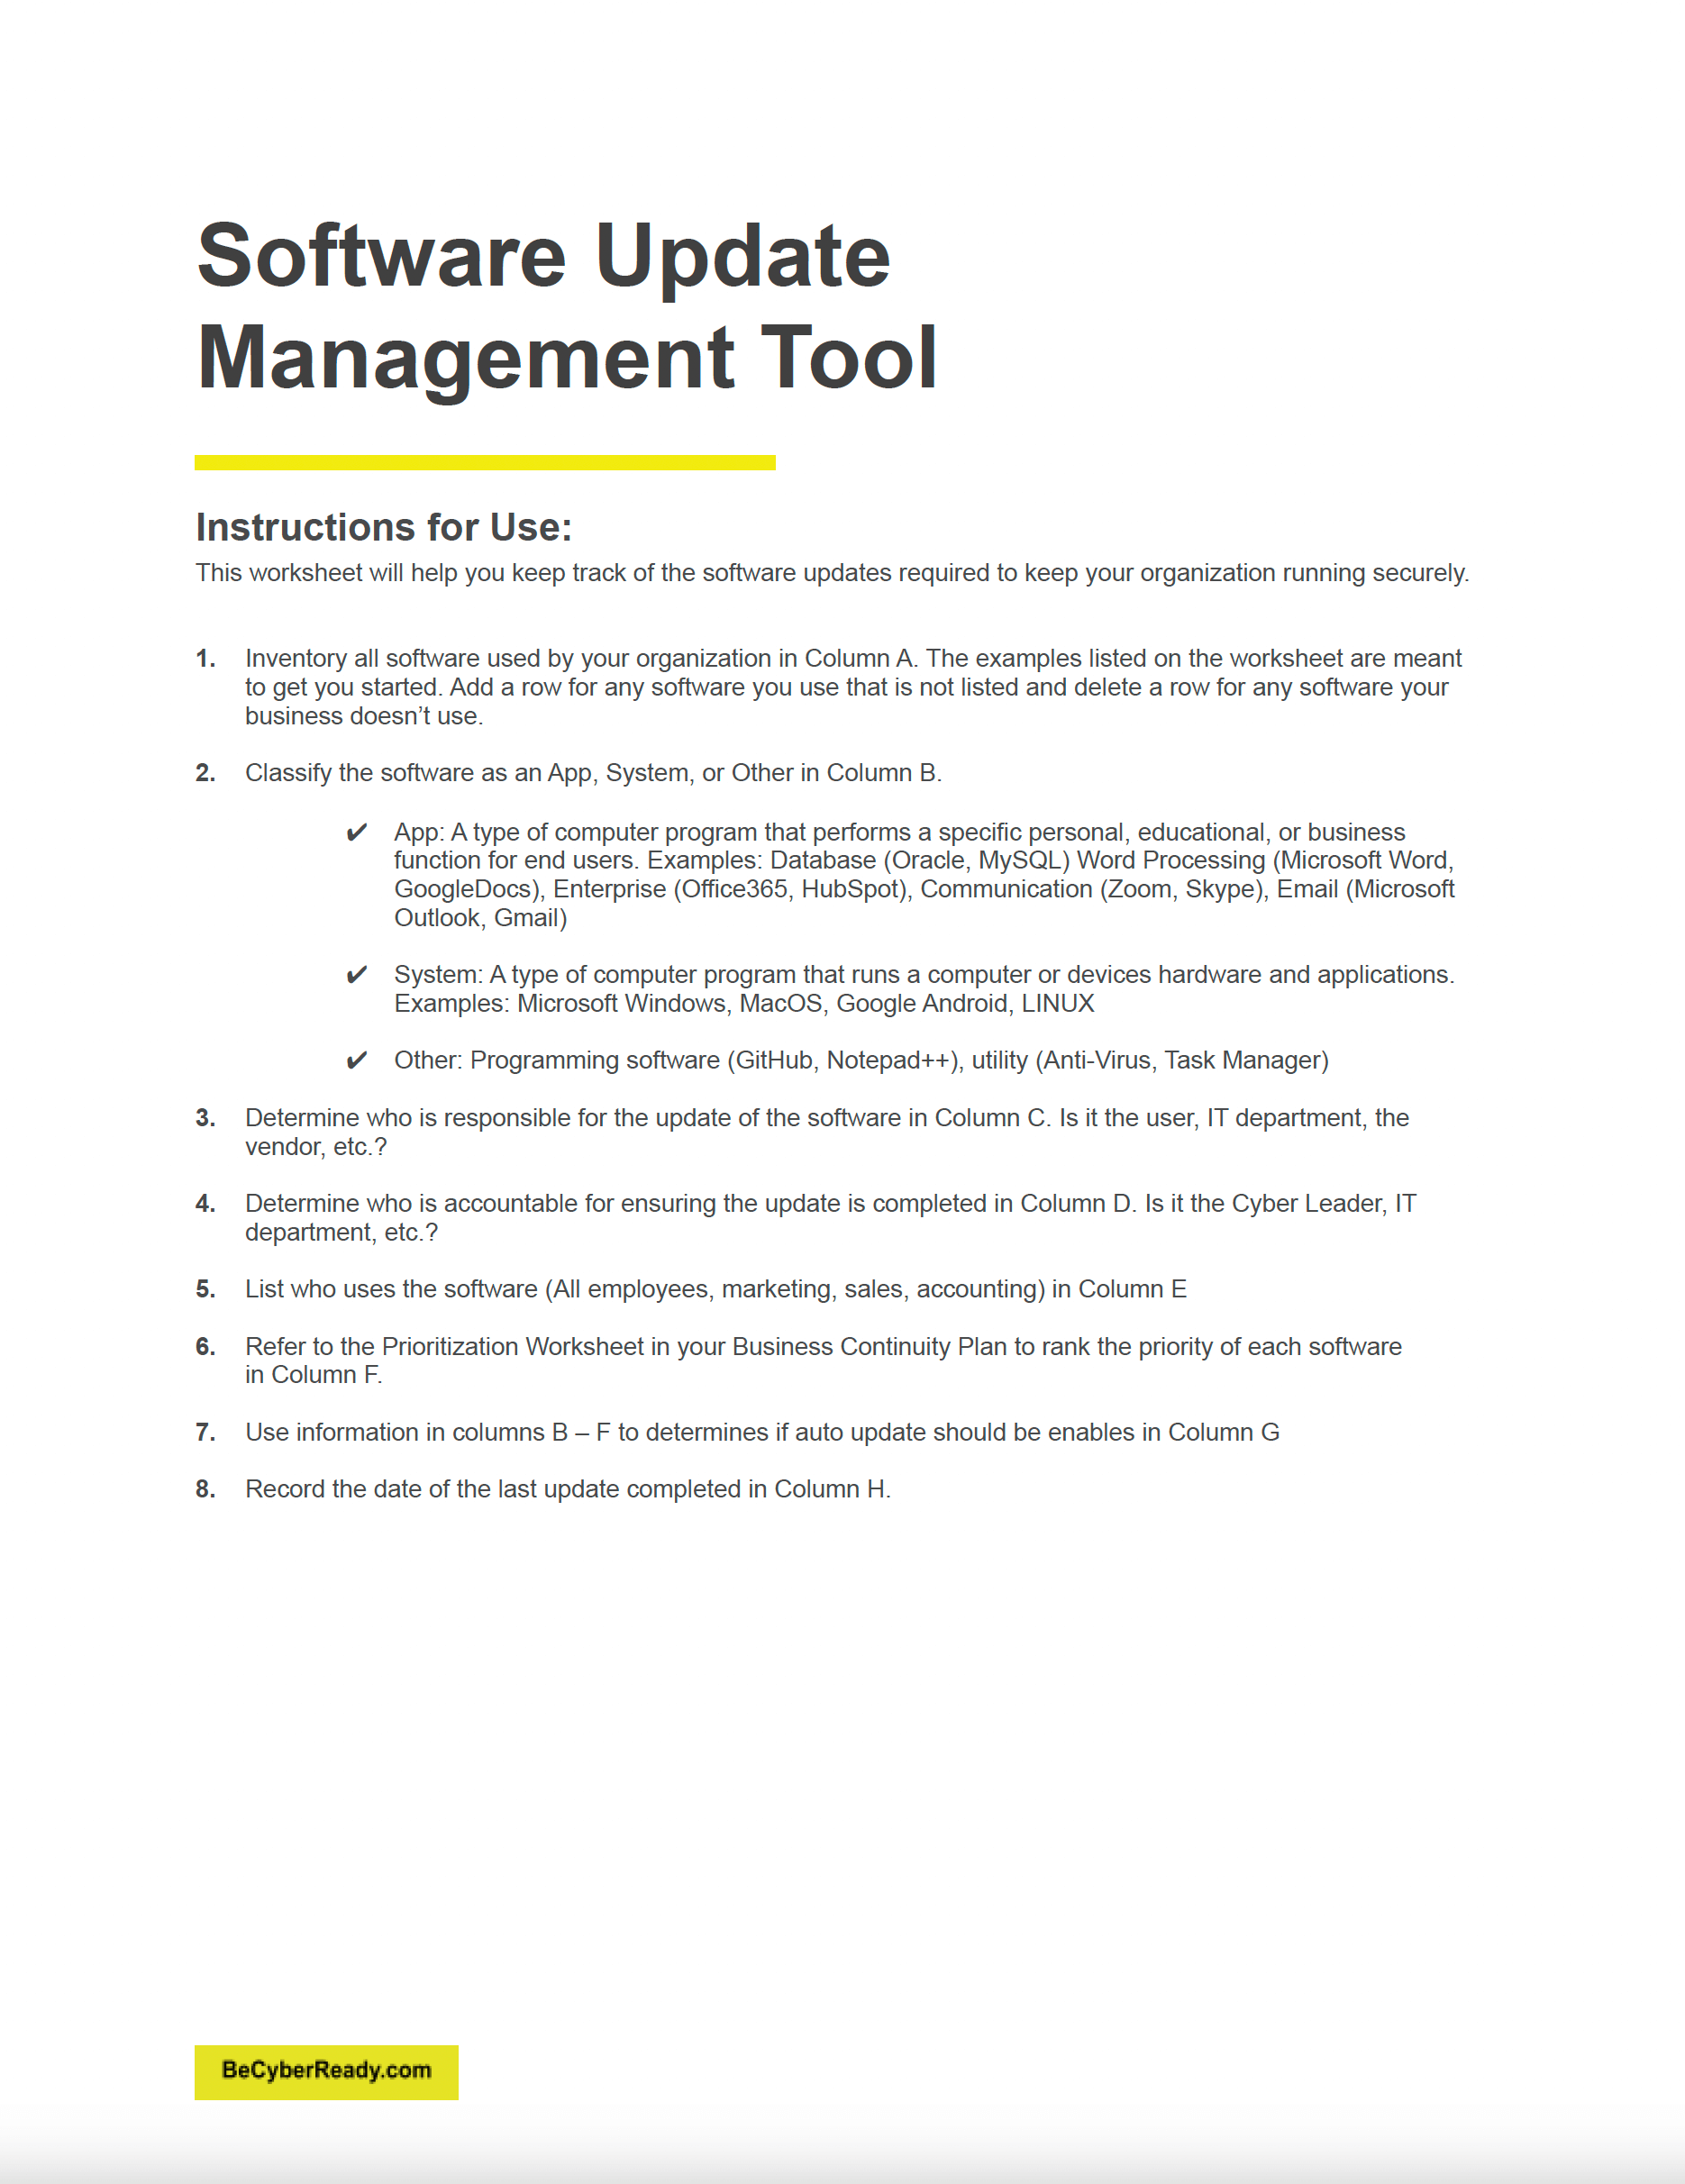 Software Update Management Tool thumbnail